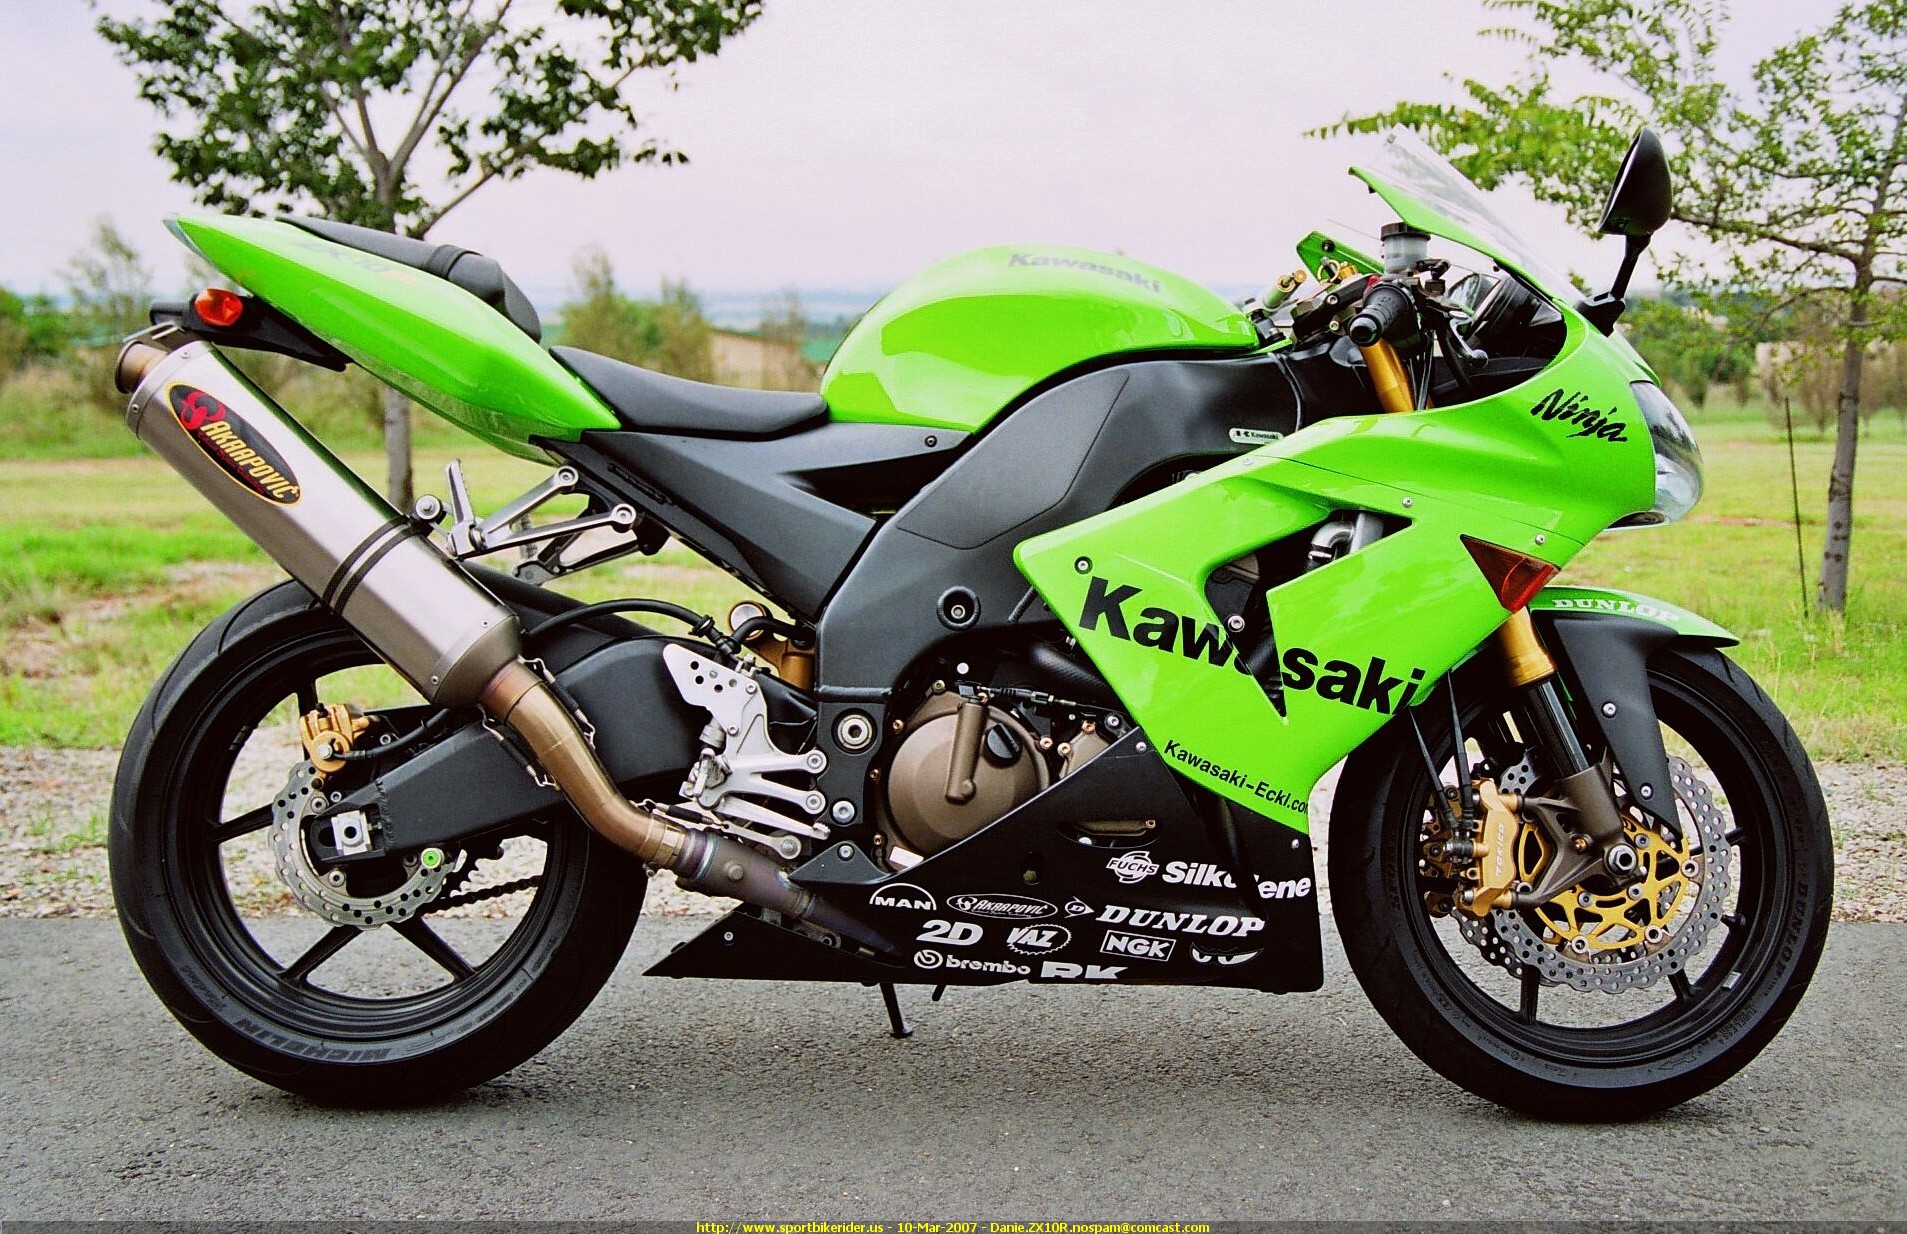 Tuning file. Kawasaki Ninja ZX-10r 2004. Kawasaki zx6r Ninja 2004. Kawasaki zx10r 2004. Kawasaki ZX-10r Ninja (2004-2005).